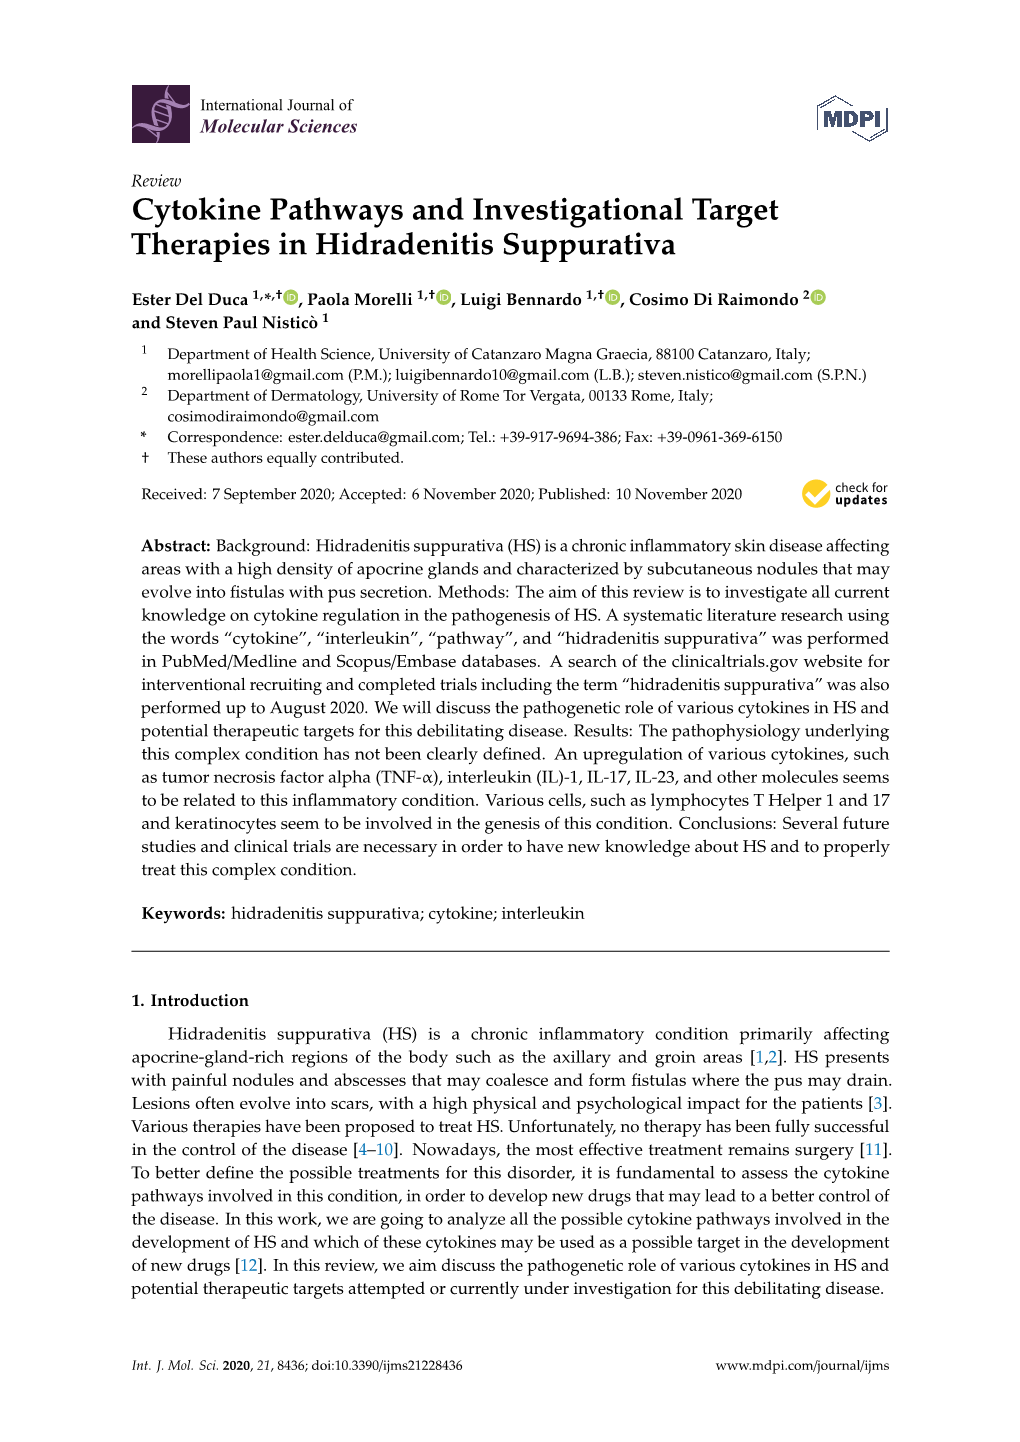 Cytokine Pathways and Investigational Target Therapies in Hidradenitis Suppurativa